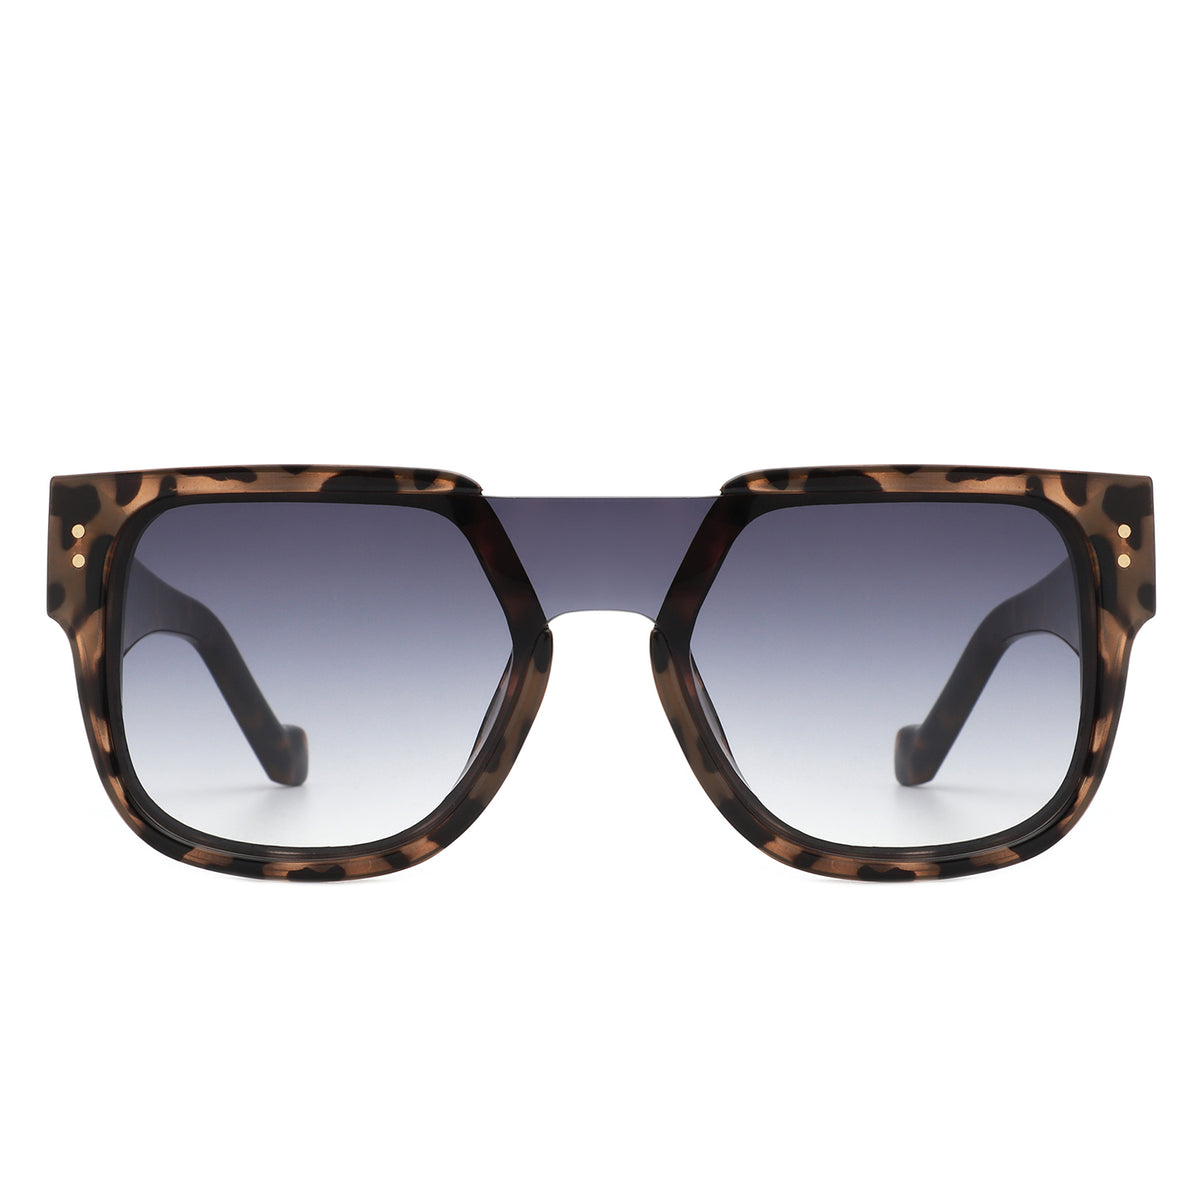 HS2121 - Square Oversize Brow-Bar Chic Women Fashion Wholesale Sunglasses